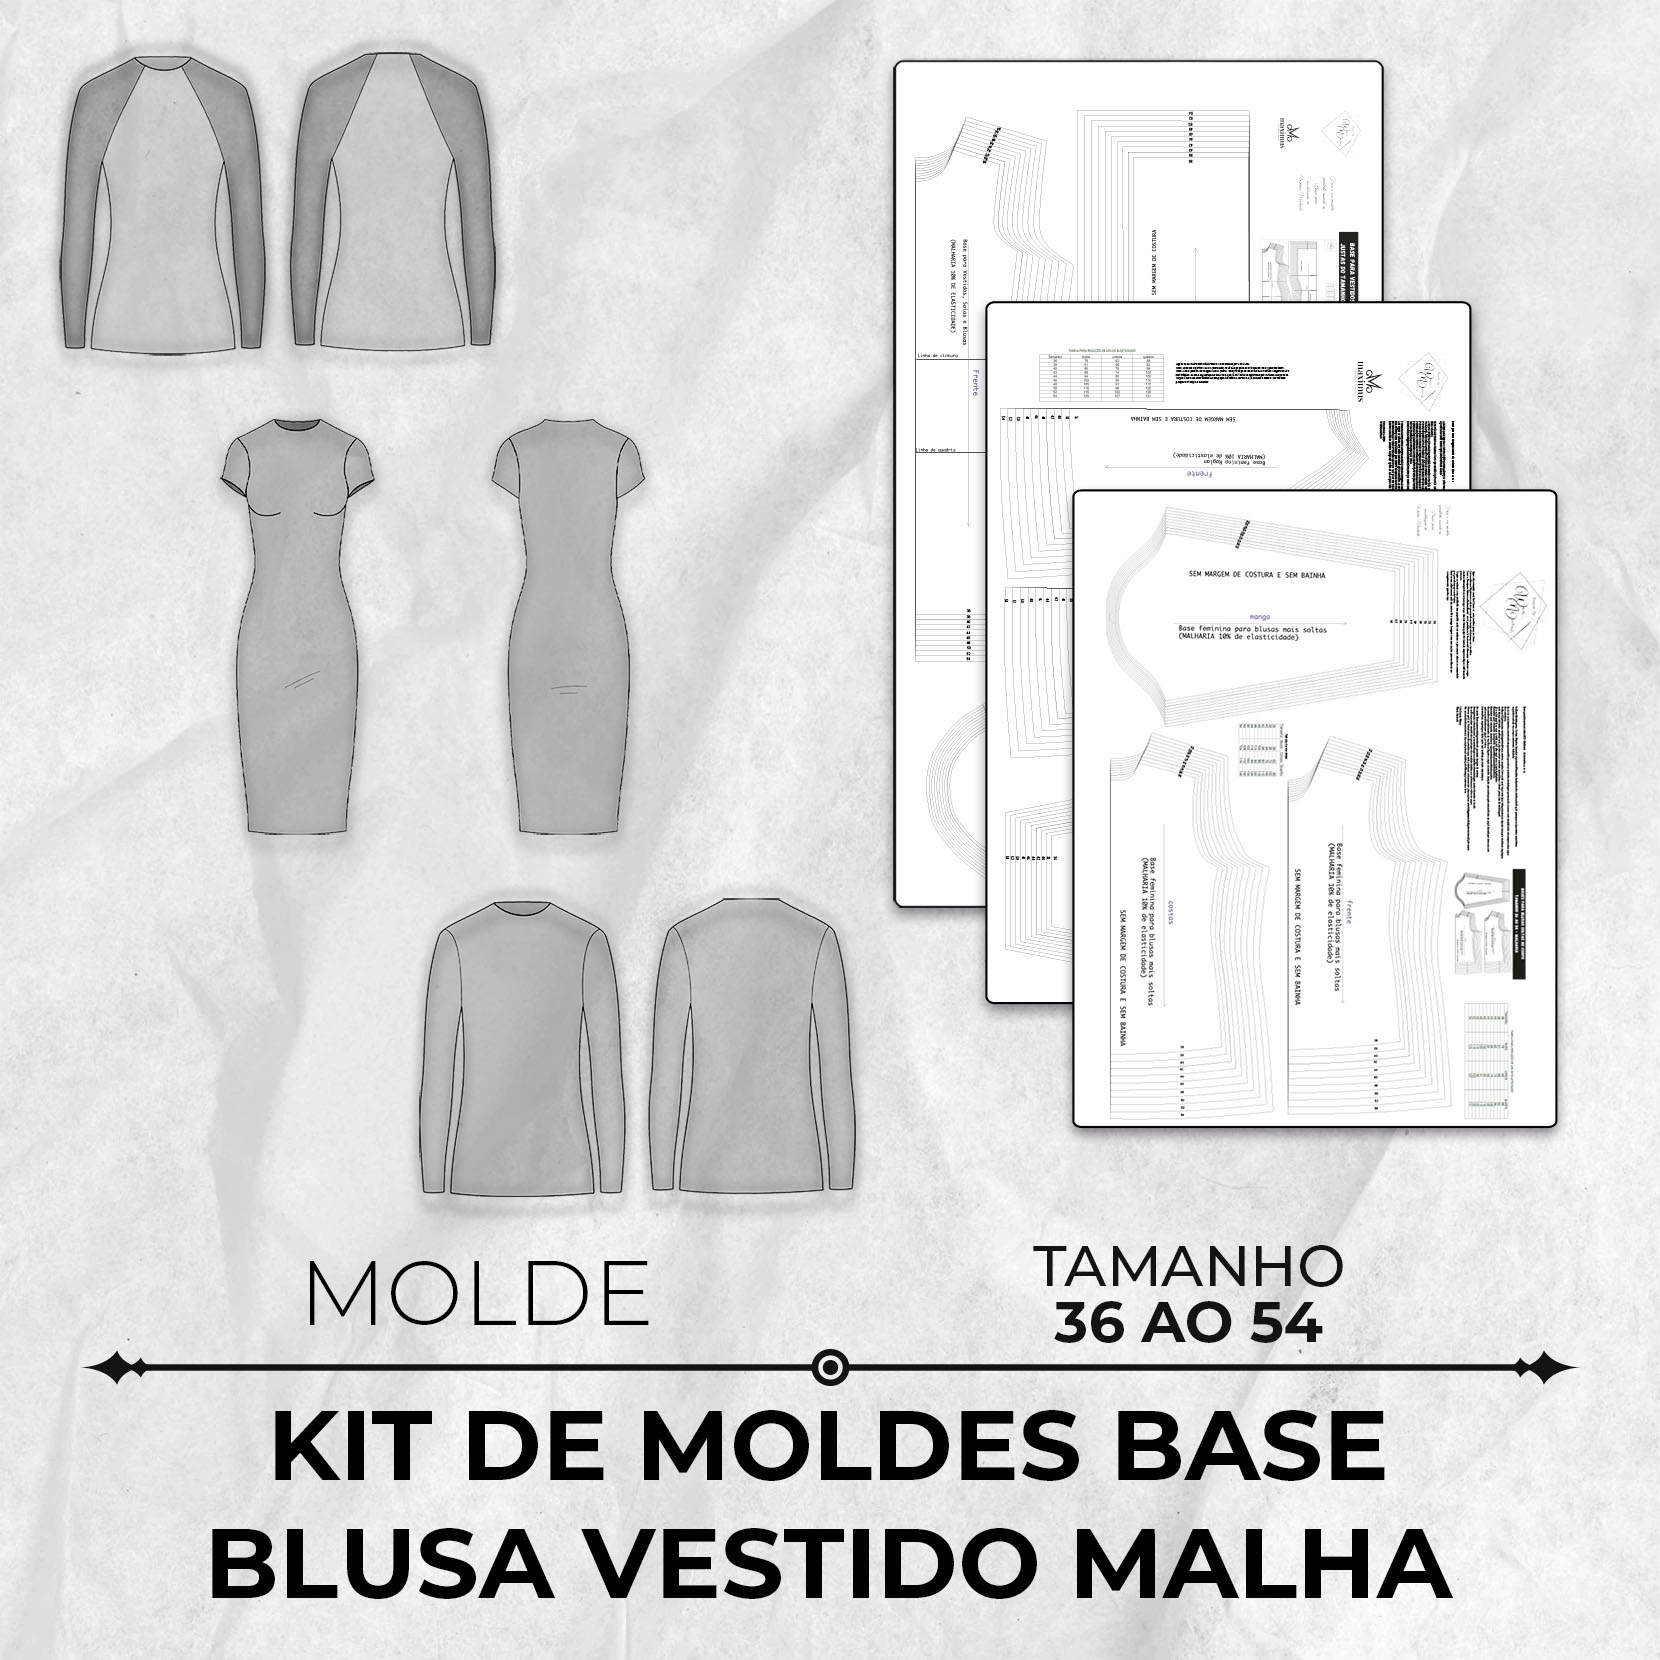 Kit de Moldes Base Blusa Vestido Malha tamanho 36 ao 54 by Wania Machado